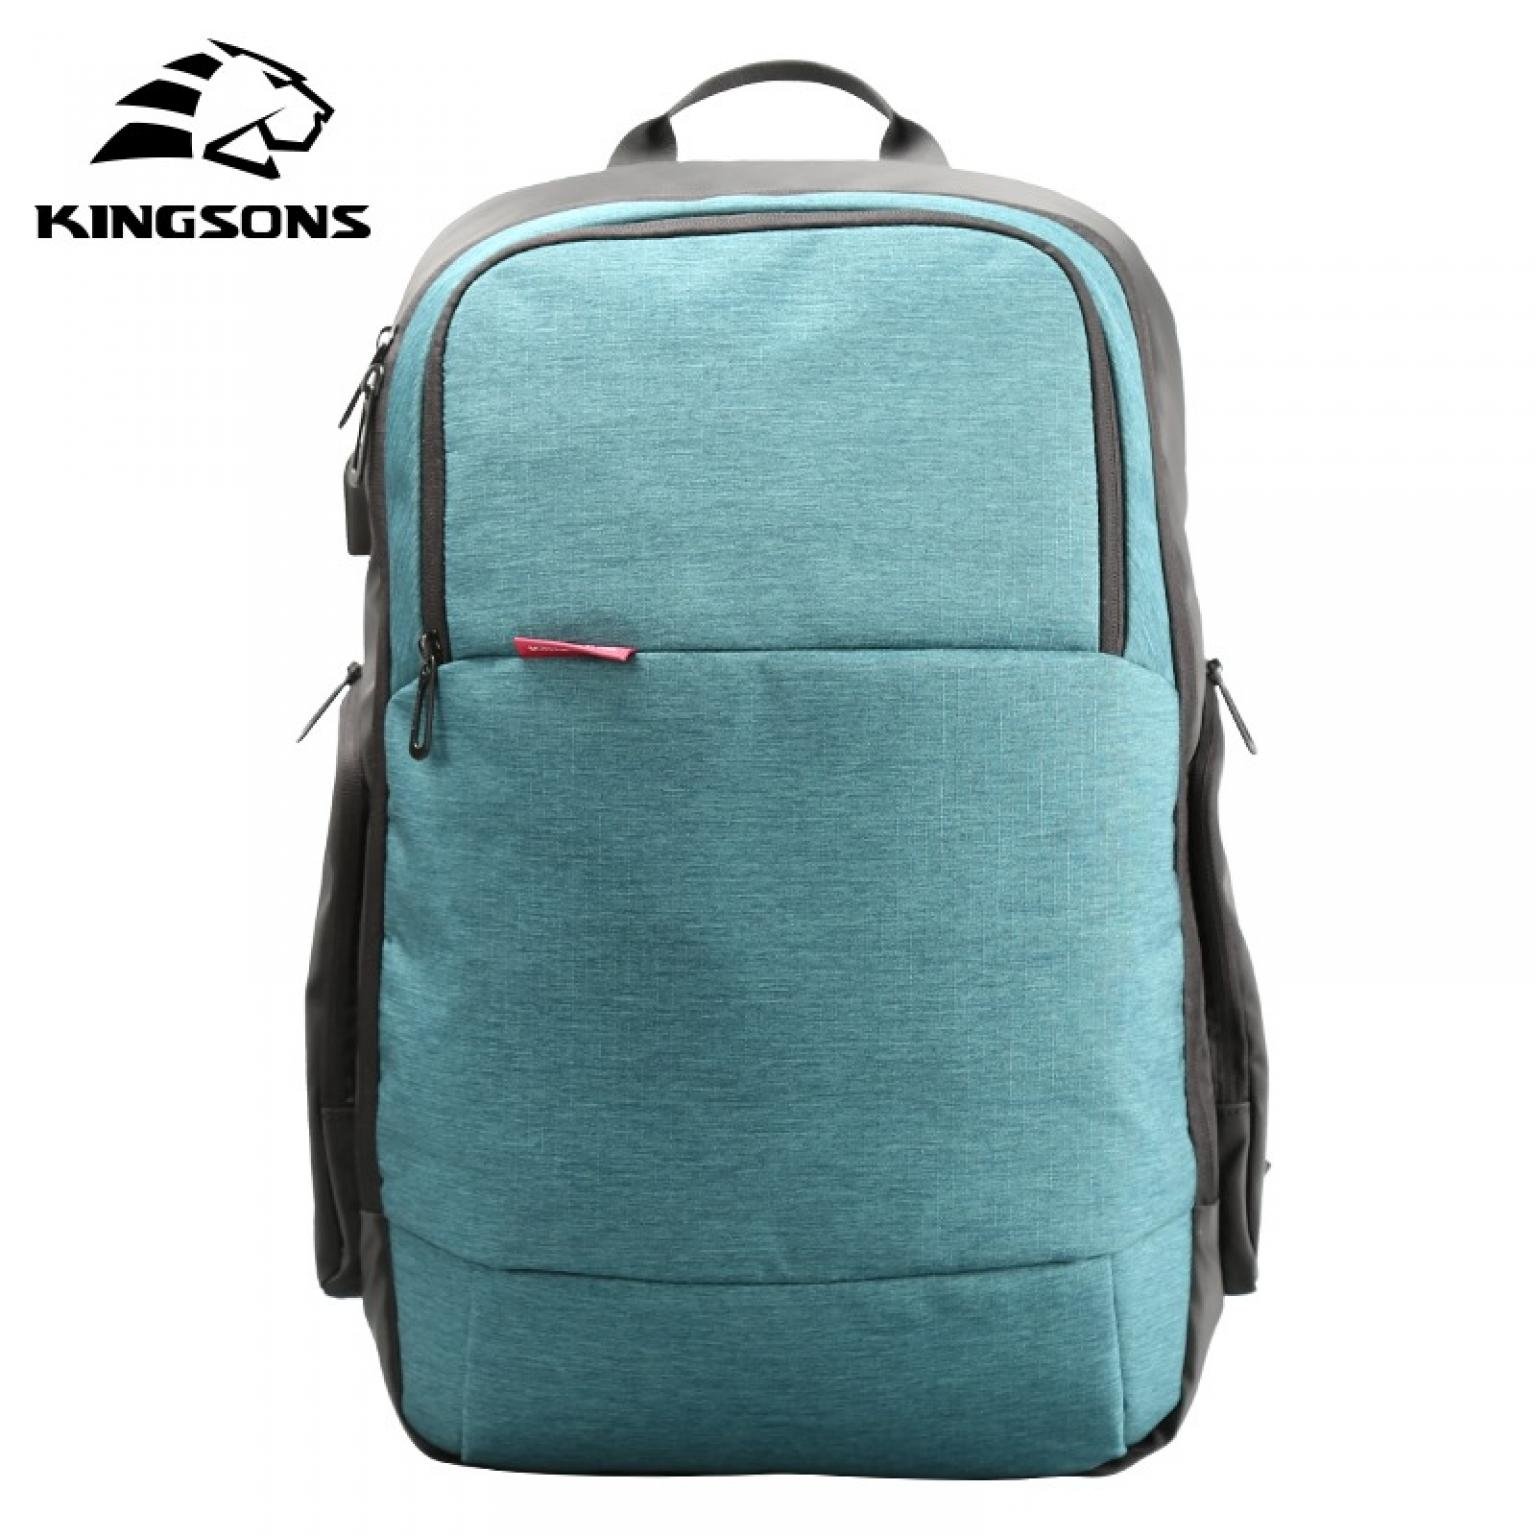 Kingsons Brand External USB Charge Travel Backpack Anti-theft Computer Laptop Bag 15.6 inch Solid Men Casual Daypacks College Bag School Bag Laptop Bagpack